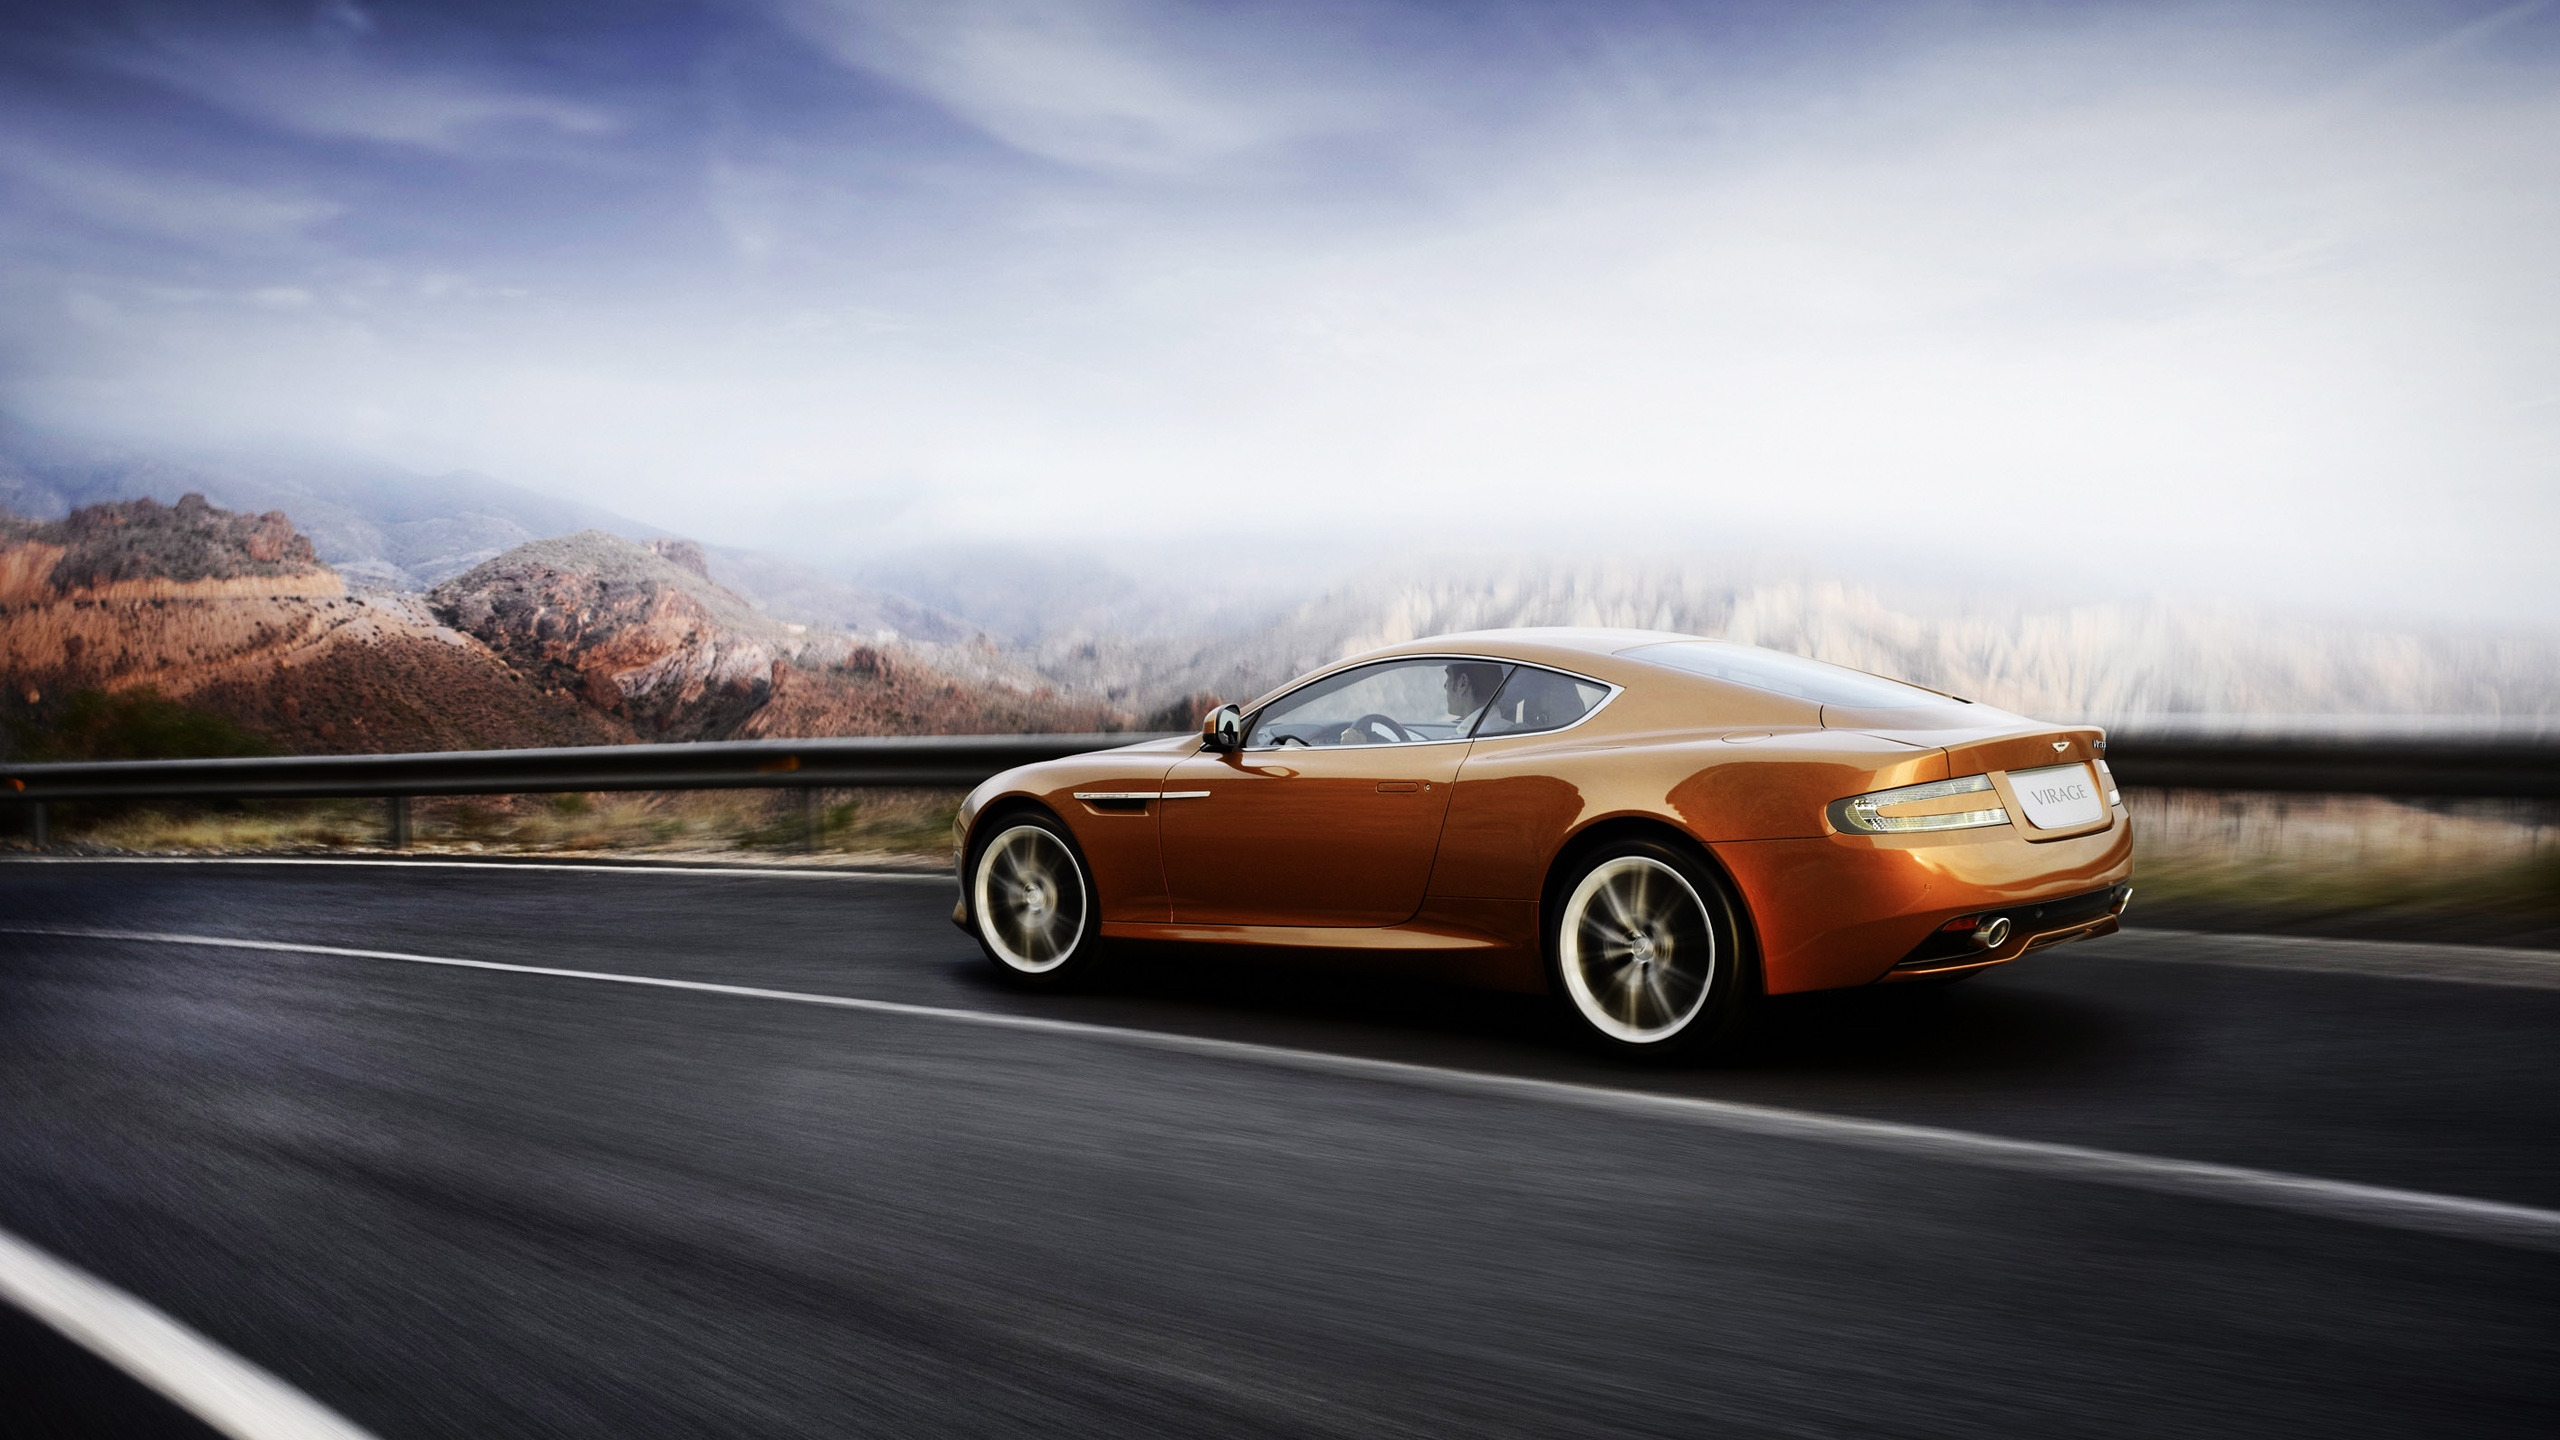 Aston Martin Virage 2011 for 2560x1440 HDTV resolution